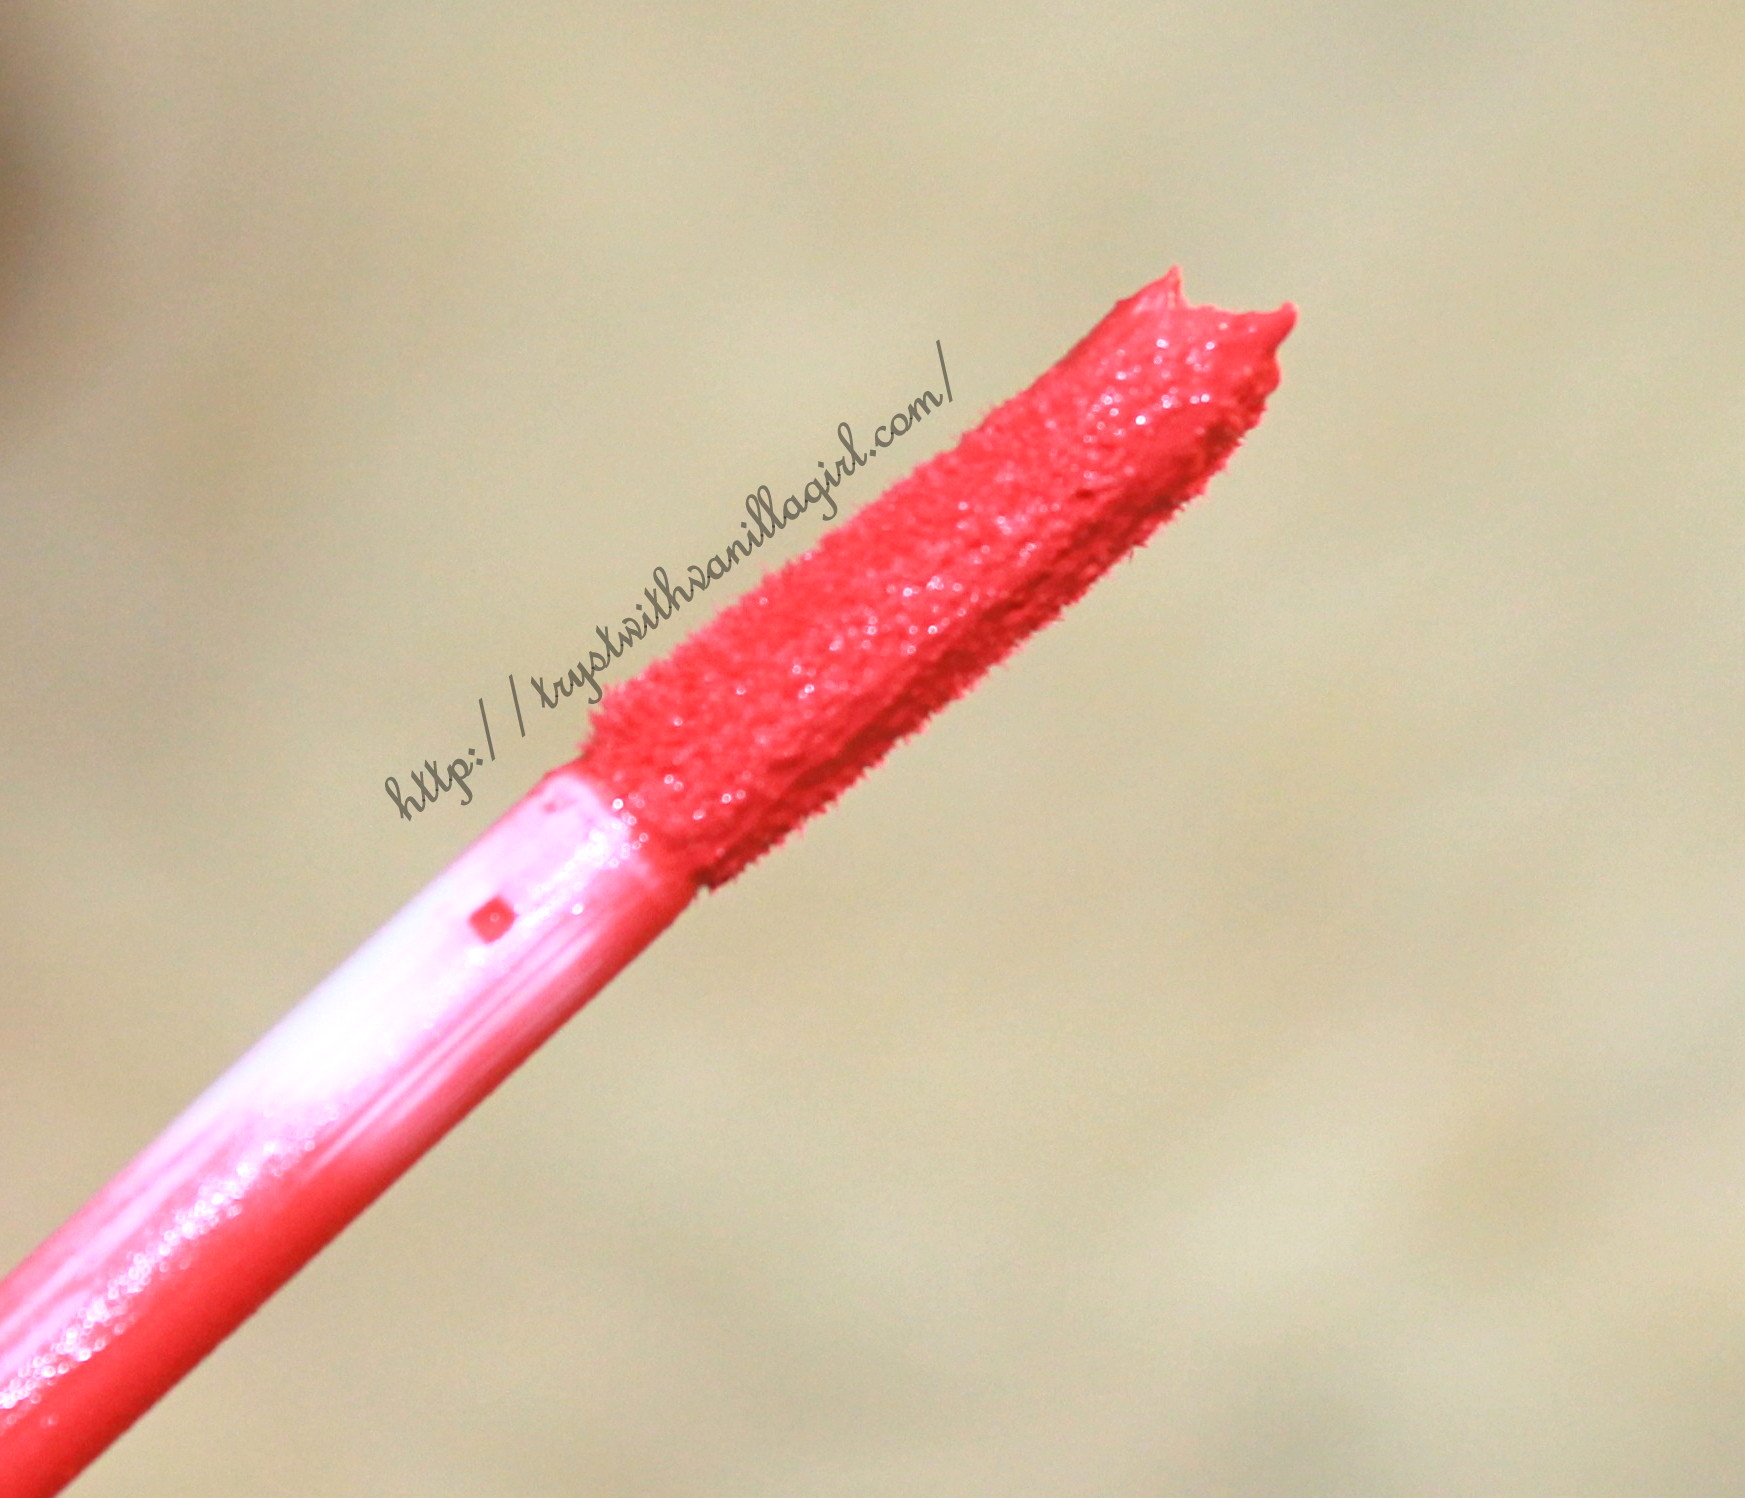 Colorbar Deep Matte Lip Creme Deep Blush Review,Swatch,Photos